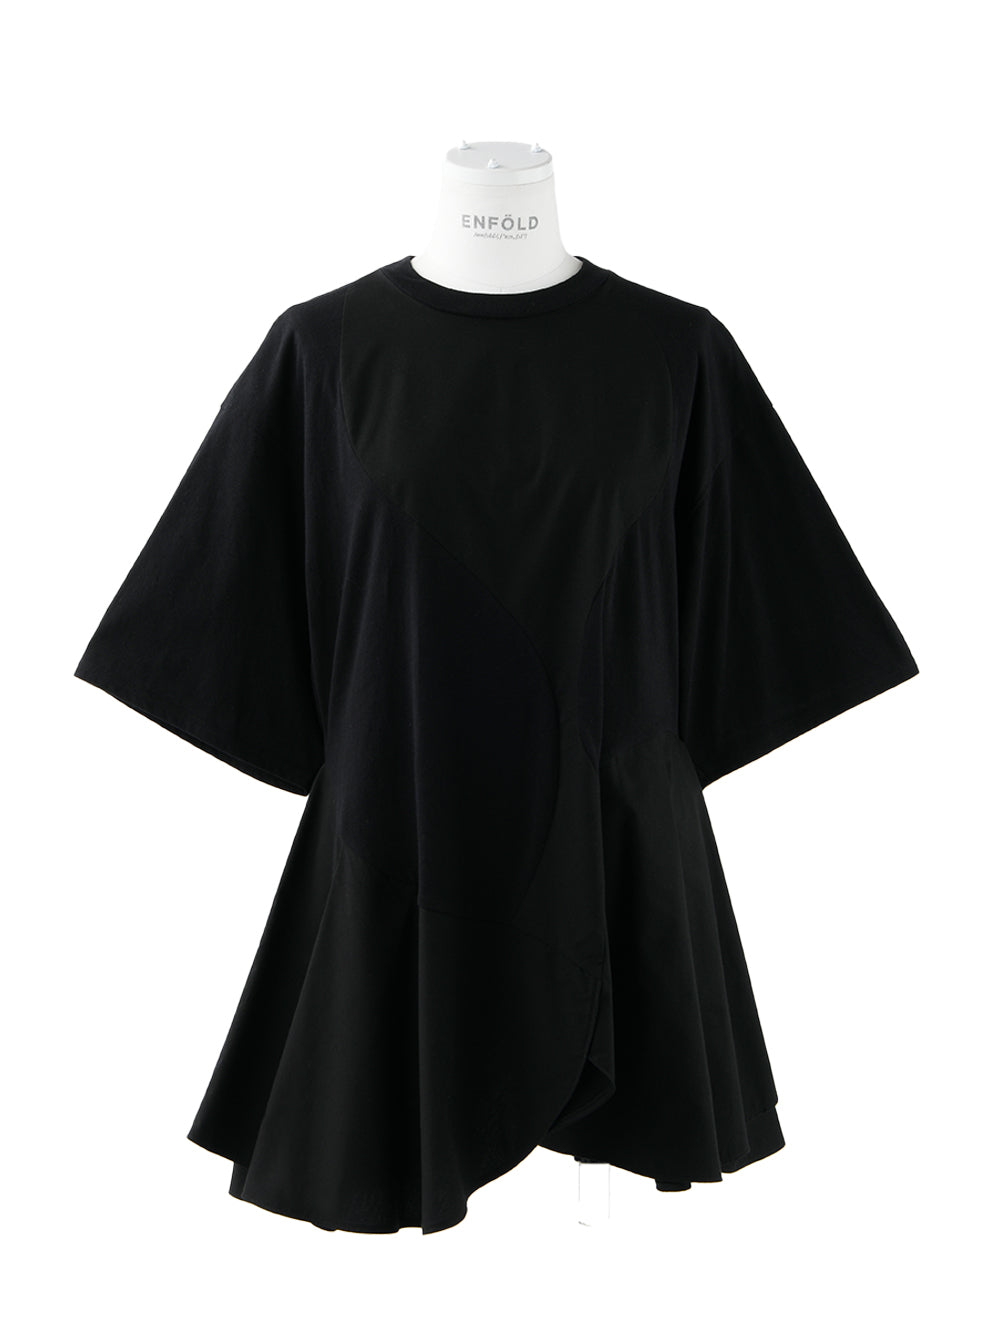 Petal Hem T-Shirt (Black)